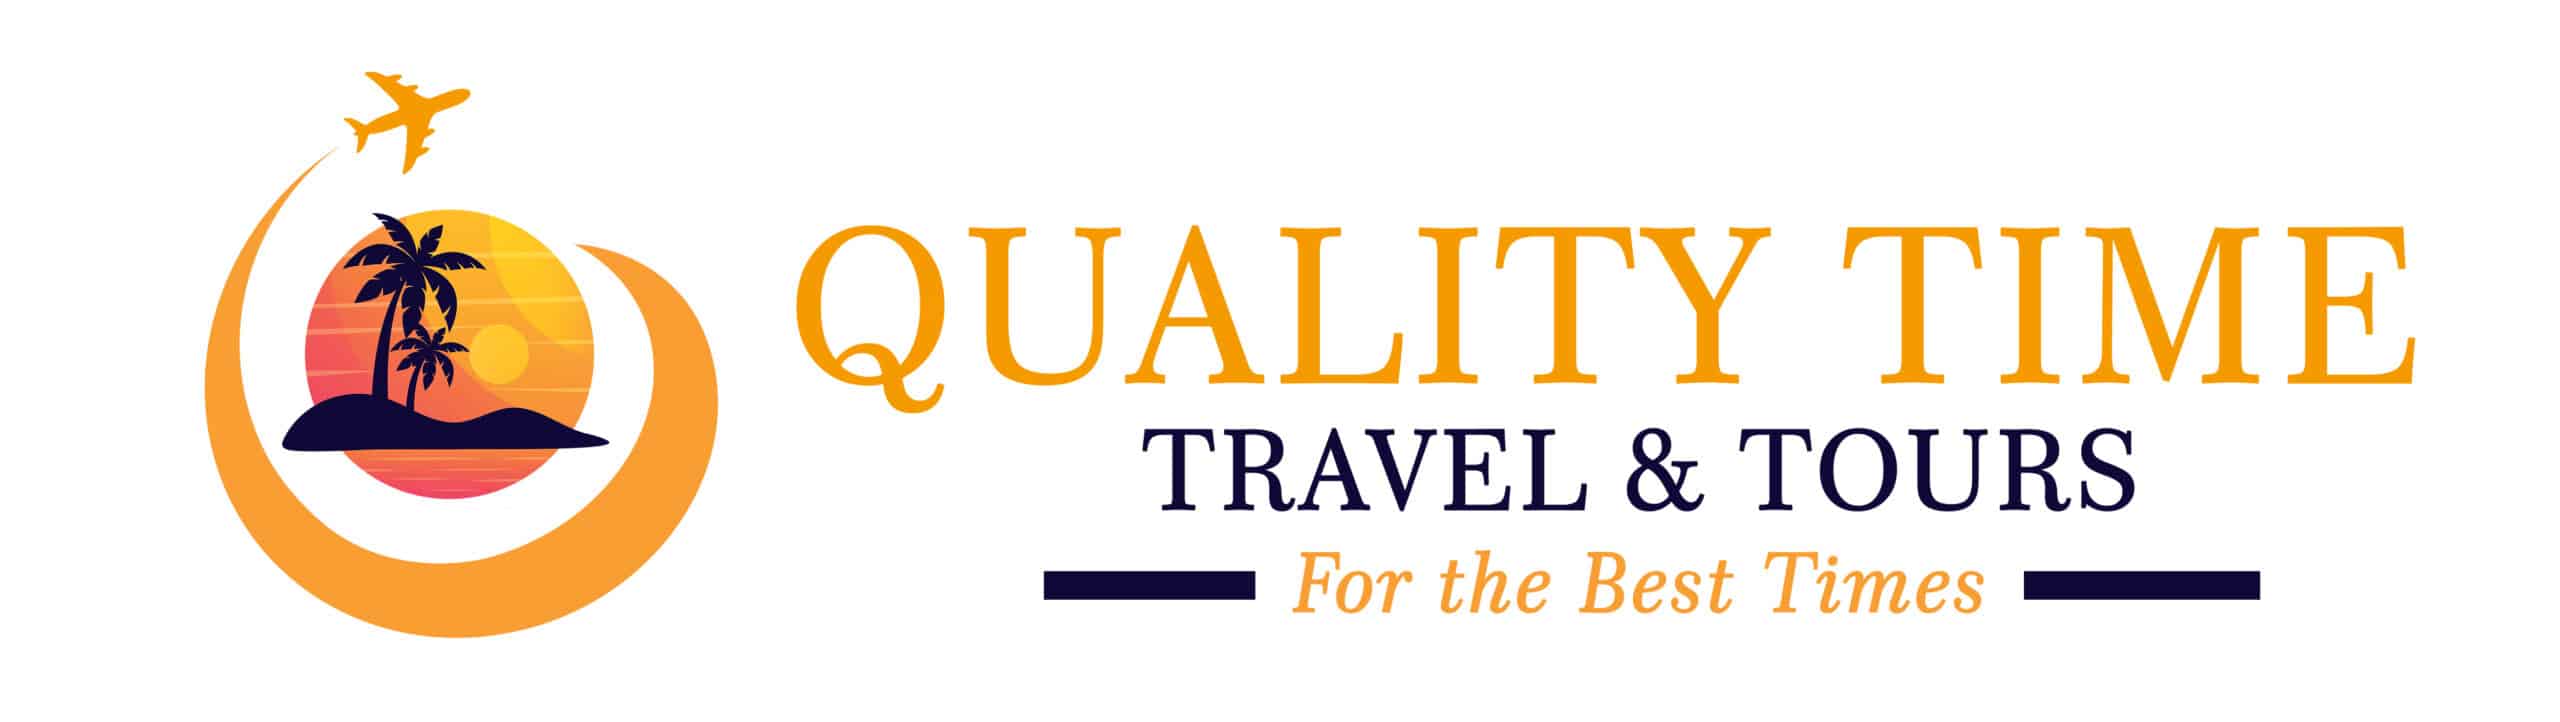 Quality time travel logo